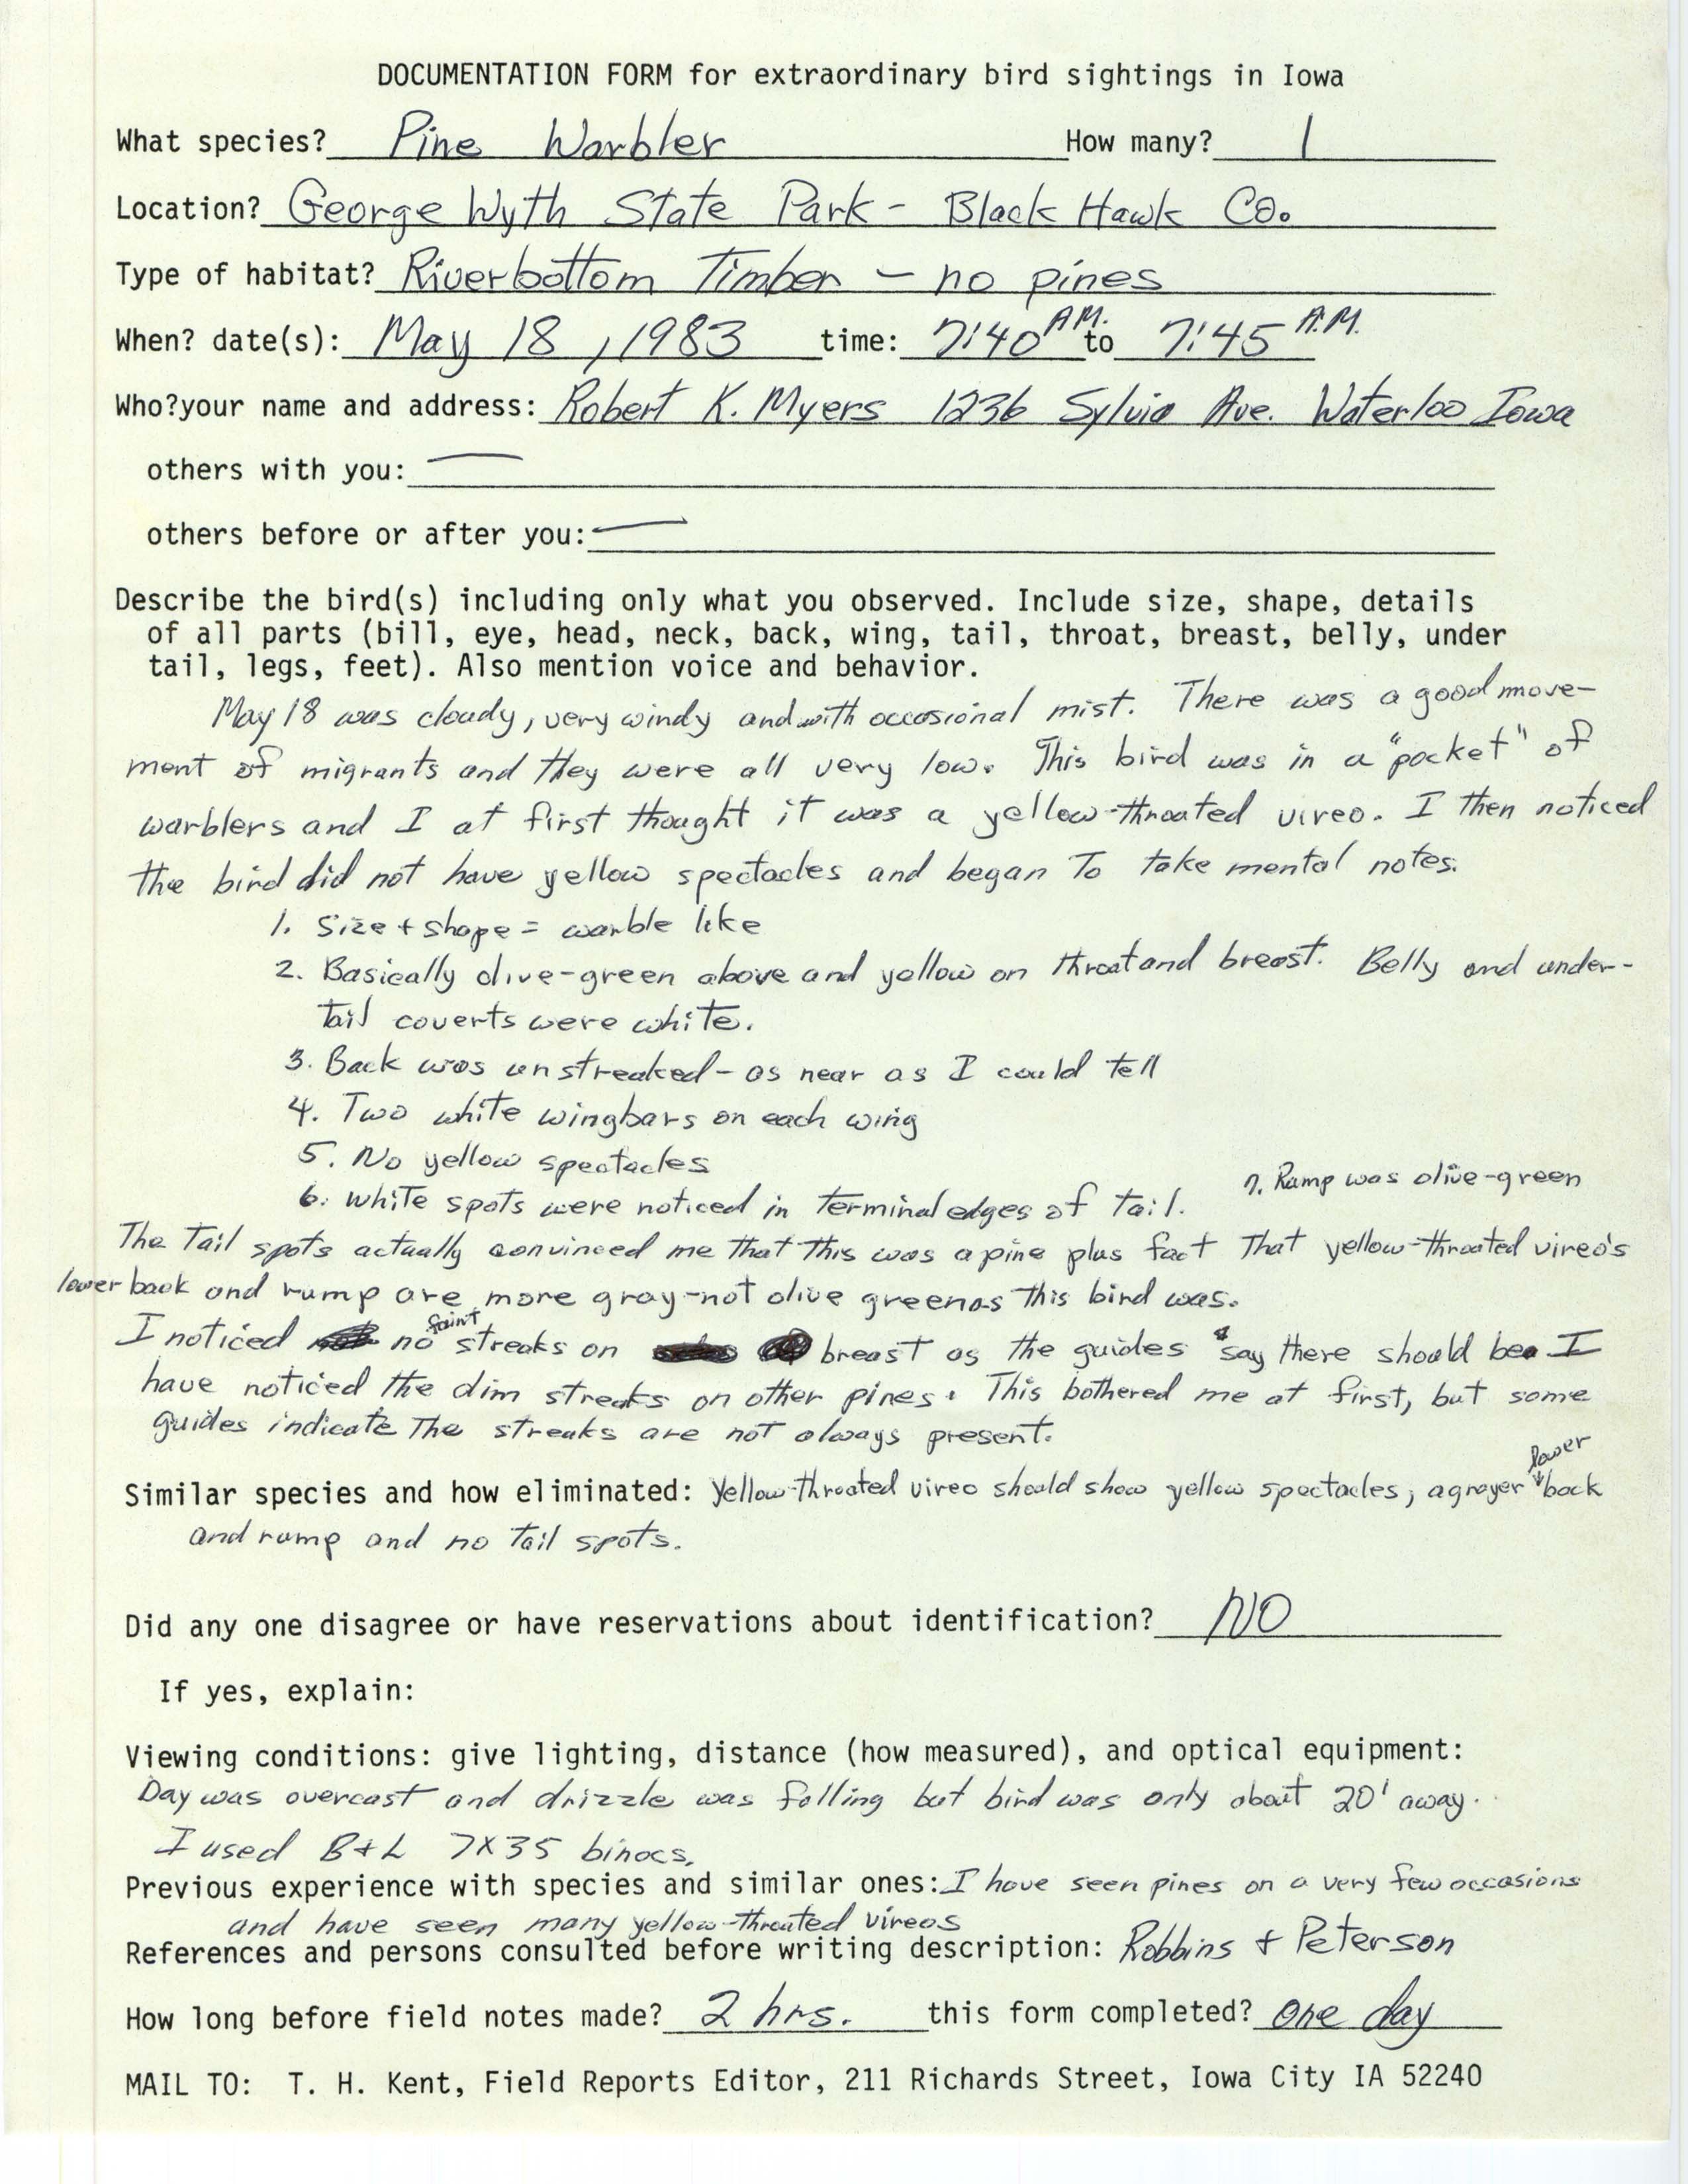 Rare bird documentation form for Pine Warbler at George Wyth State Park, 1983